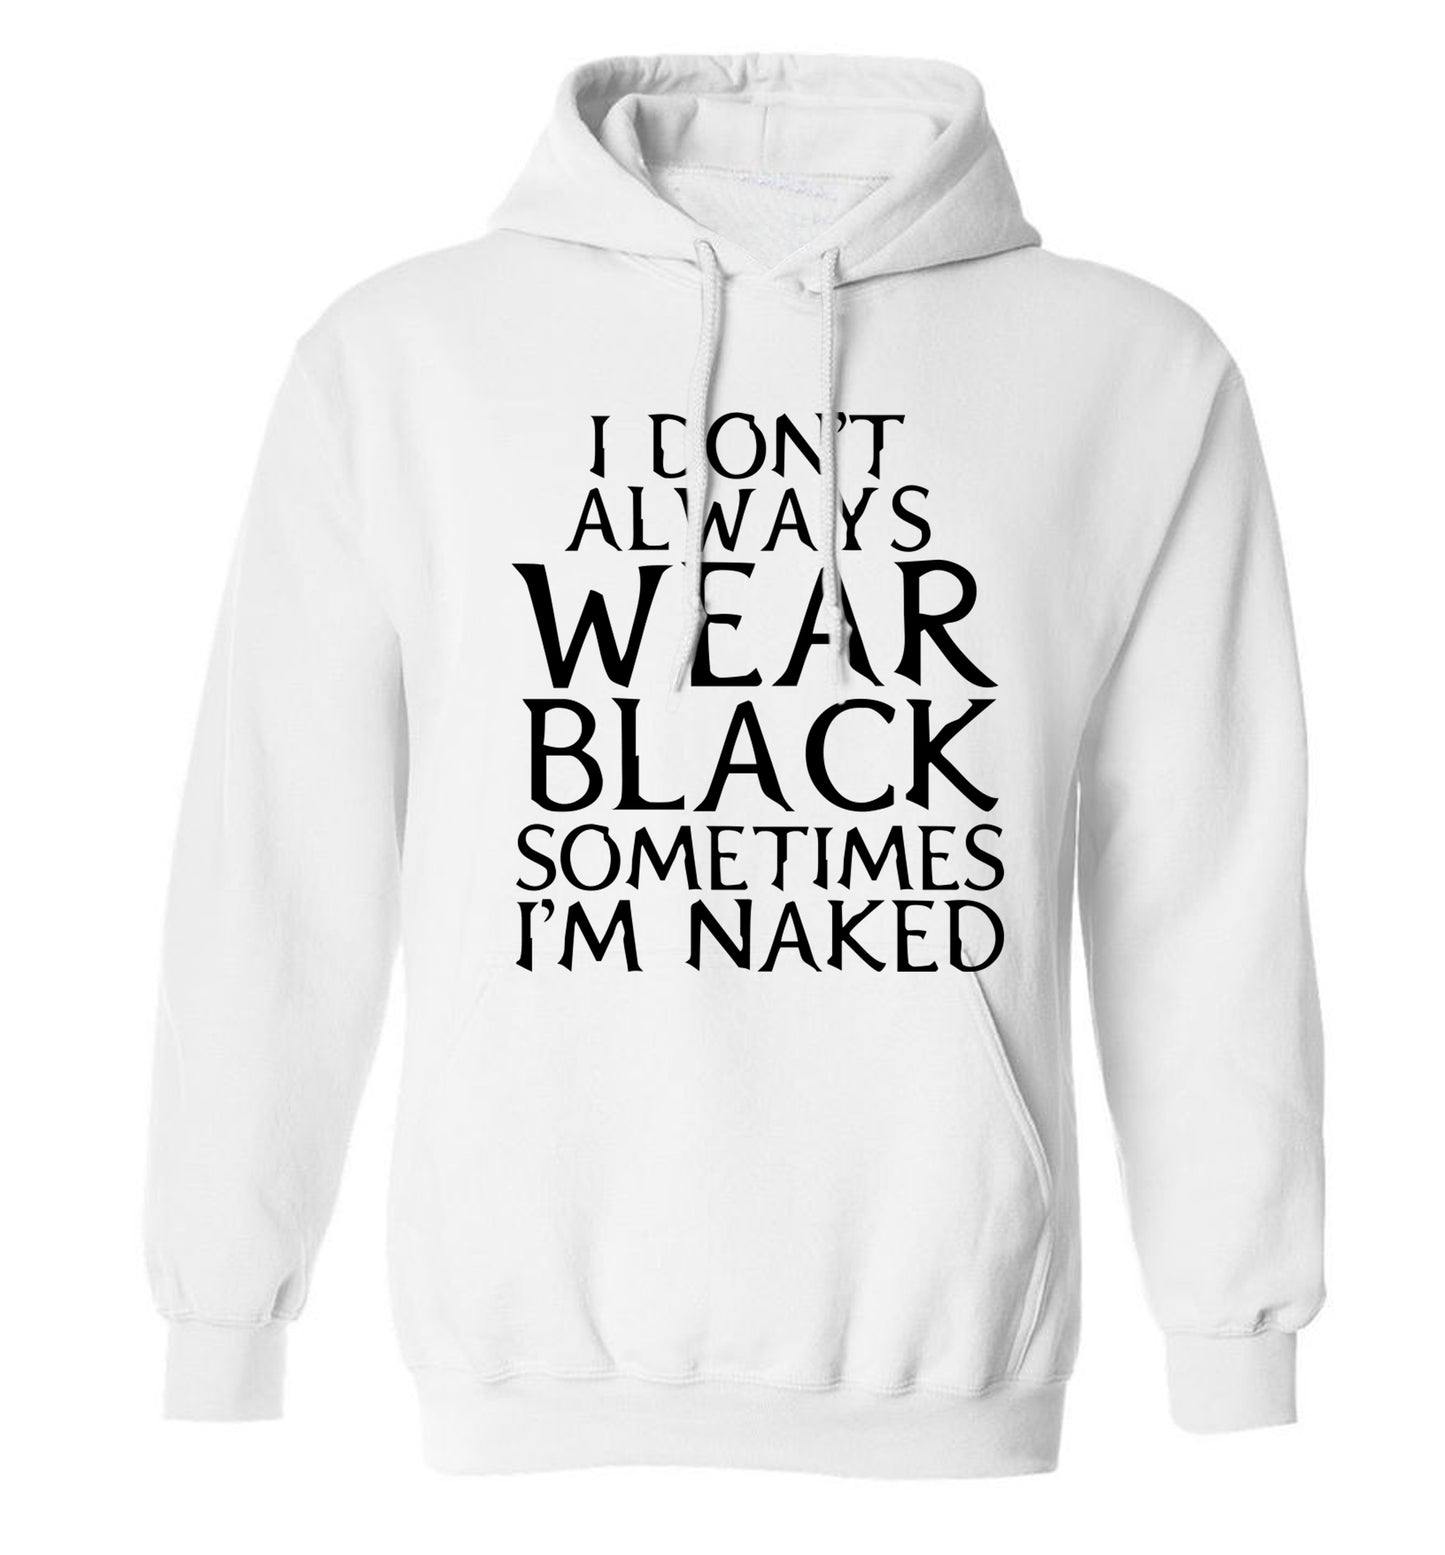 I don't always wear black sometimes I'm naked adults unisex white hoodie 2XL